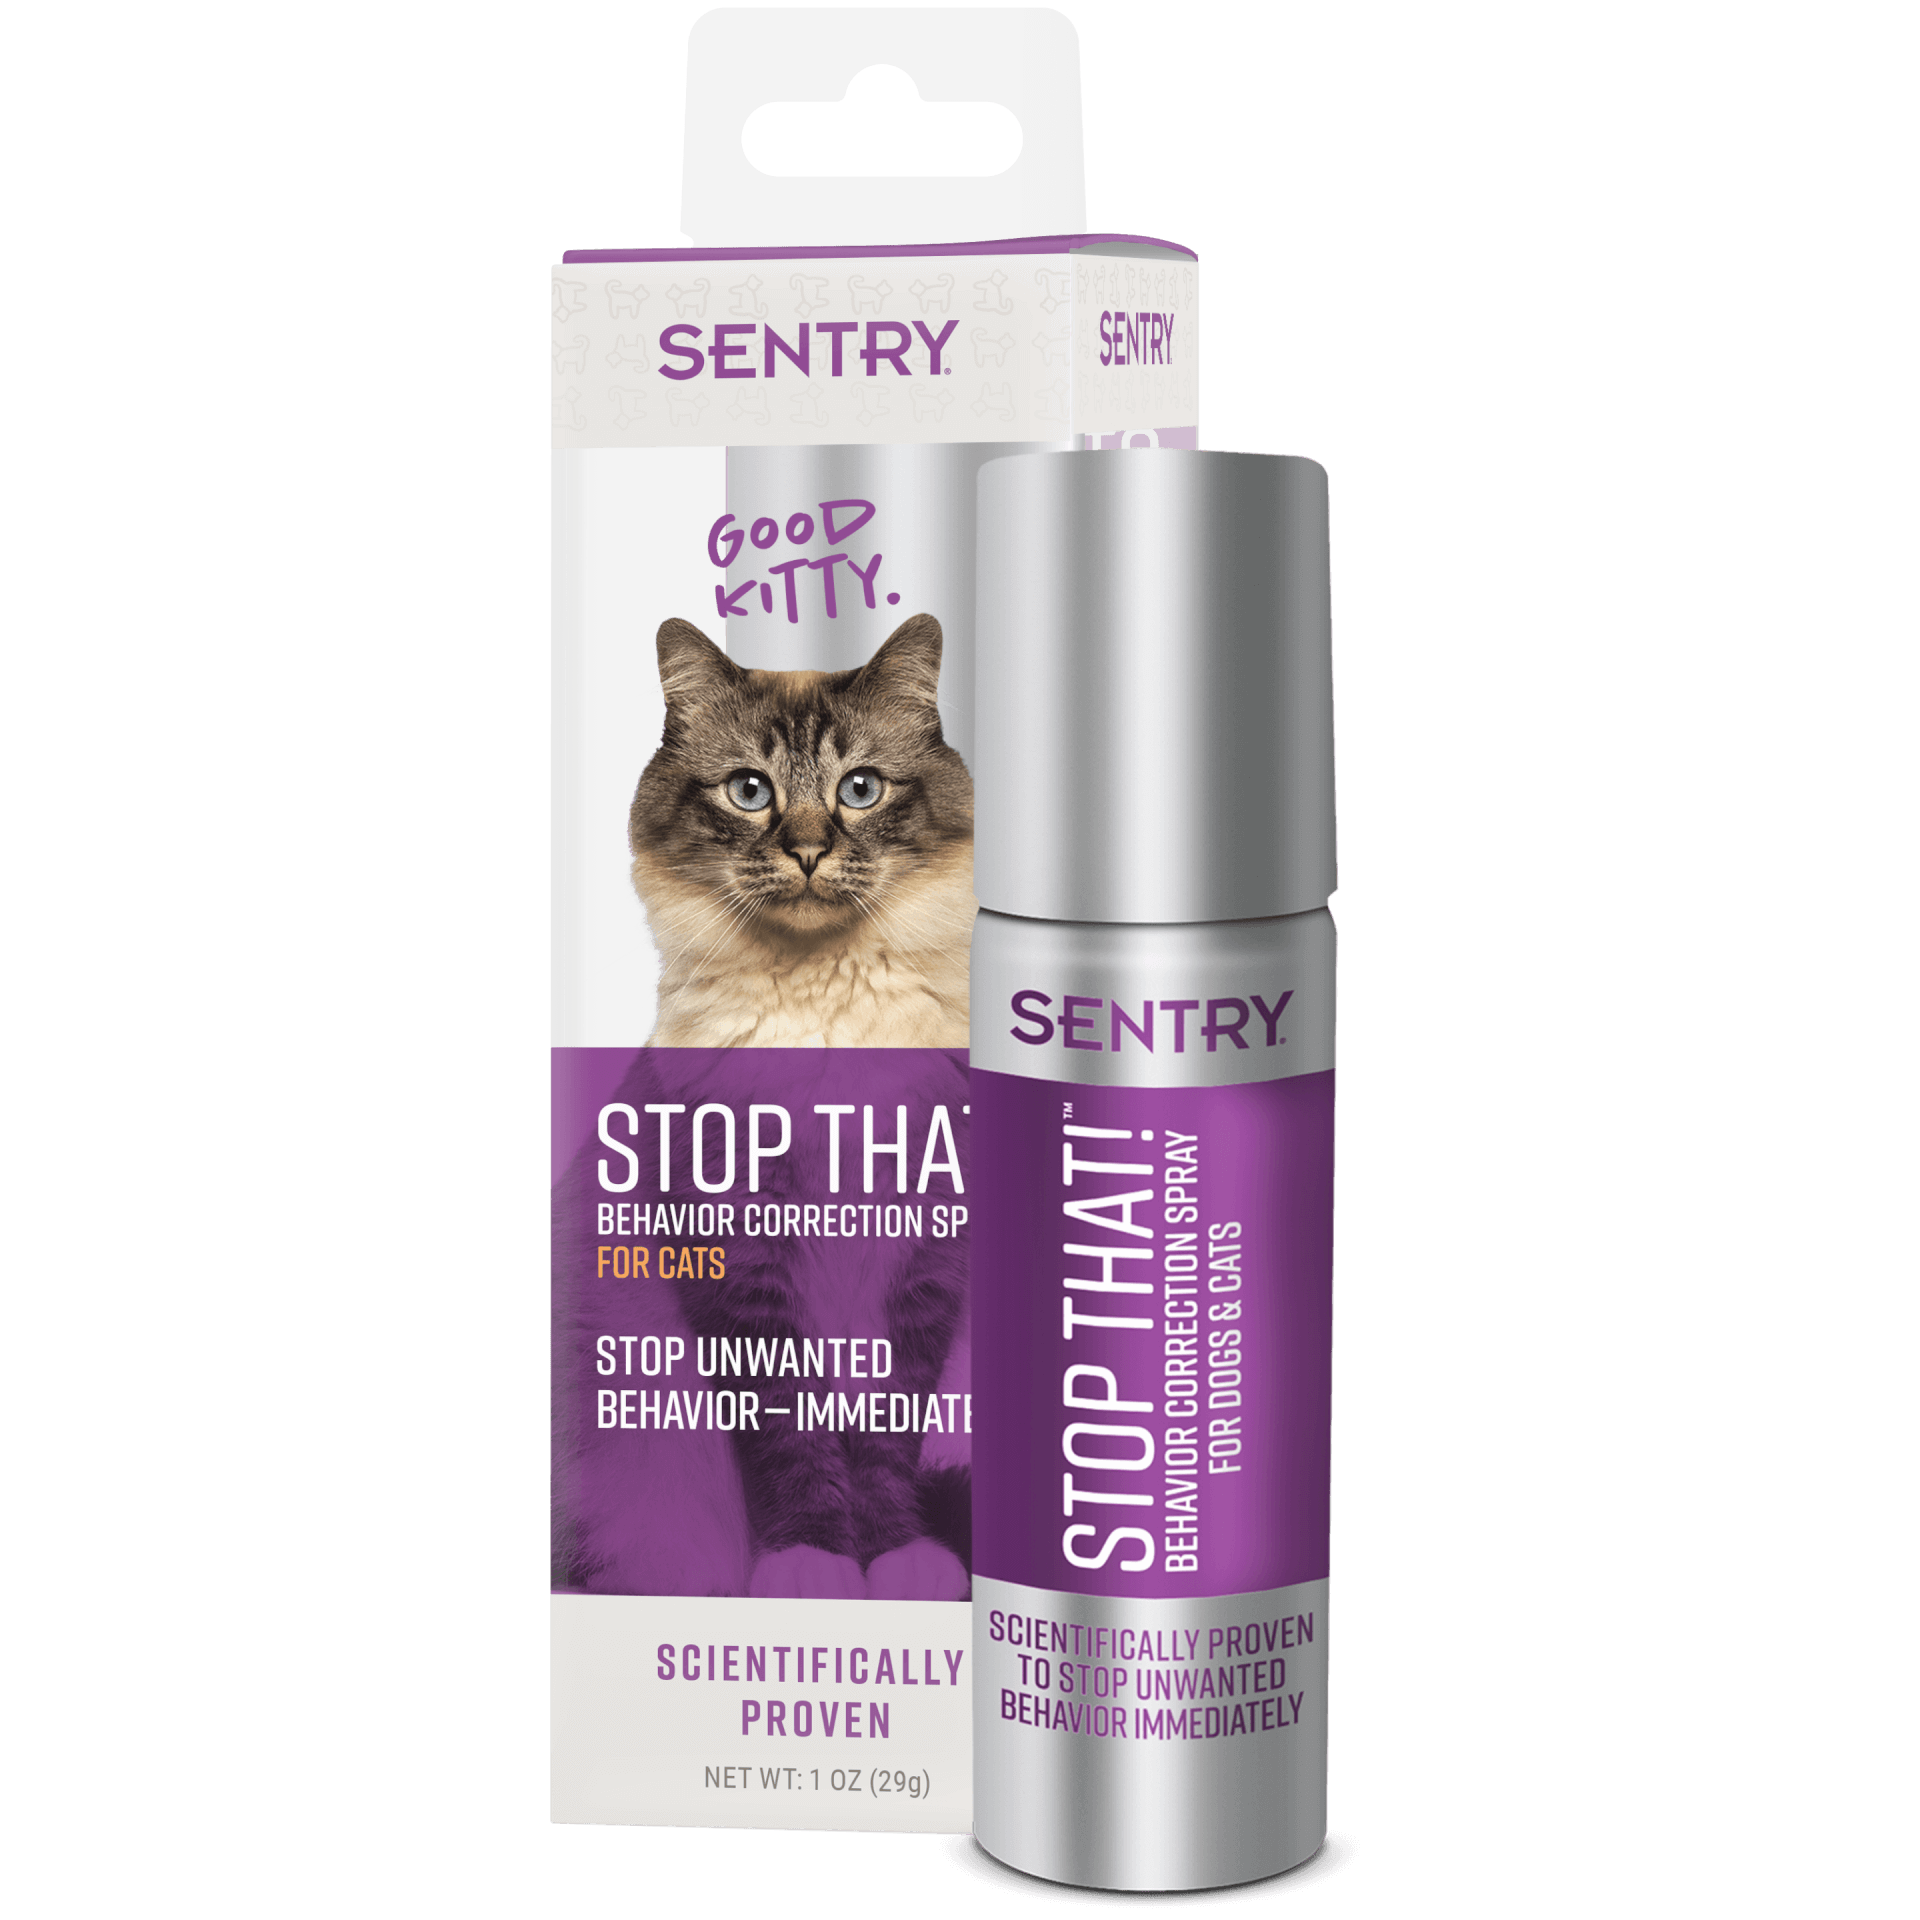 SENTRY Stop That! Behavior Correction Spray for Cats SpadezStore